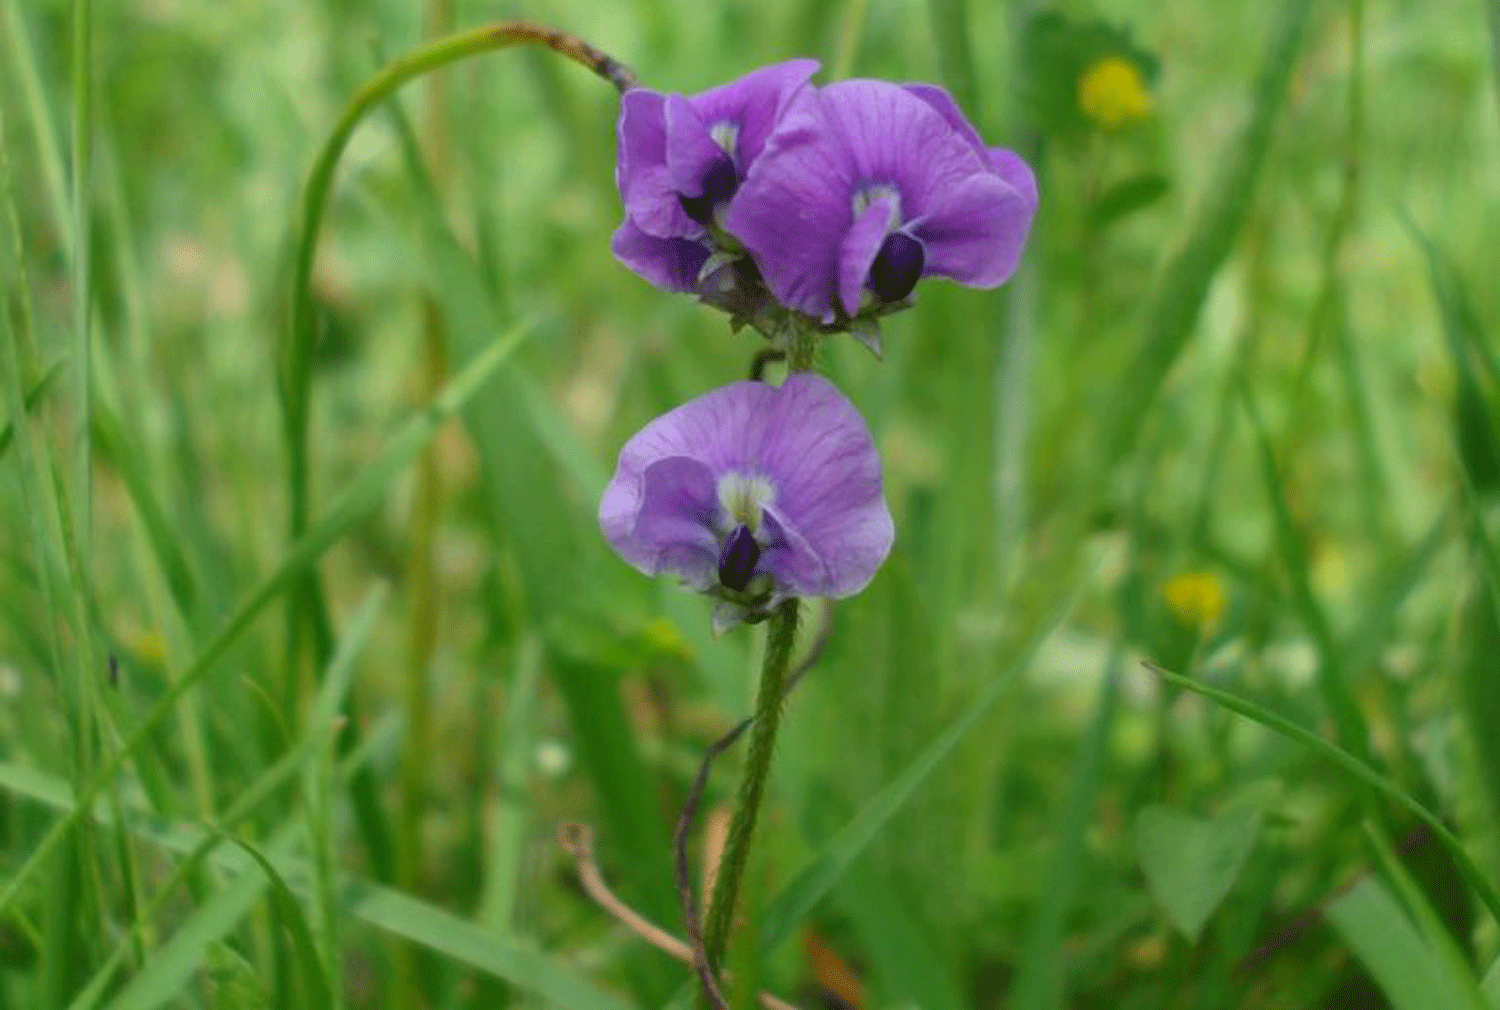 Delicate purple flower amidst grass